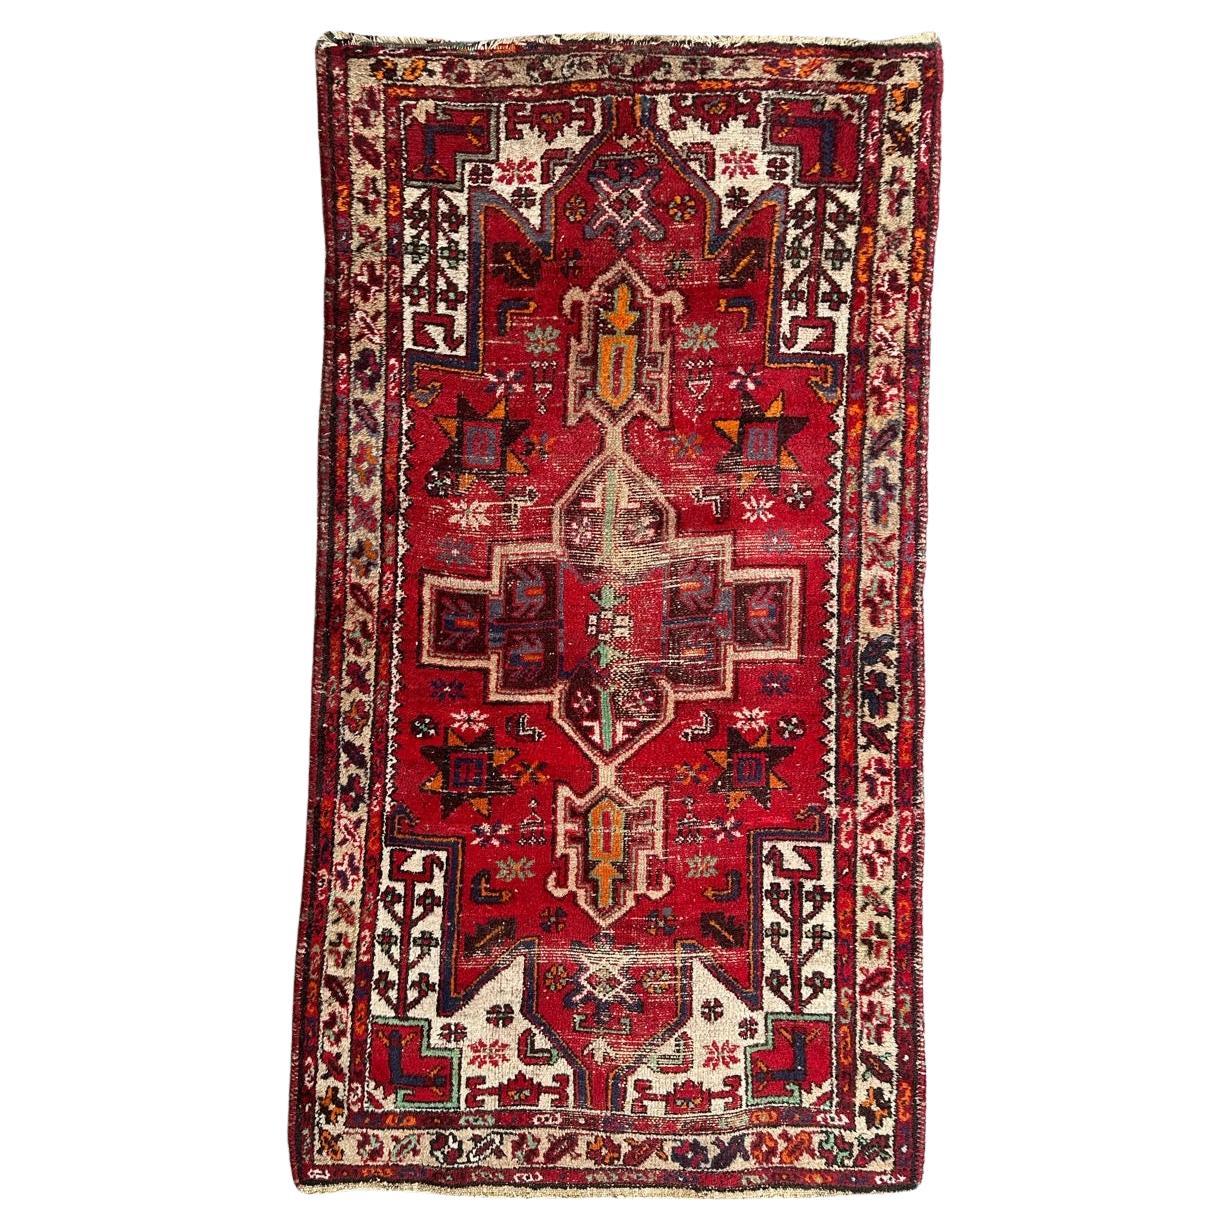 Bobyrug’s vintage distressed rustic Hamadan rug 